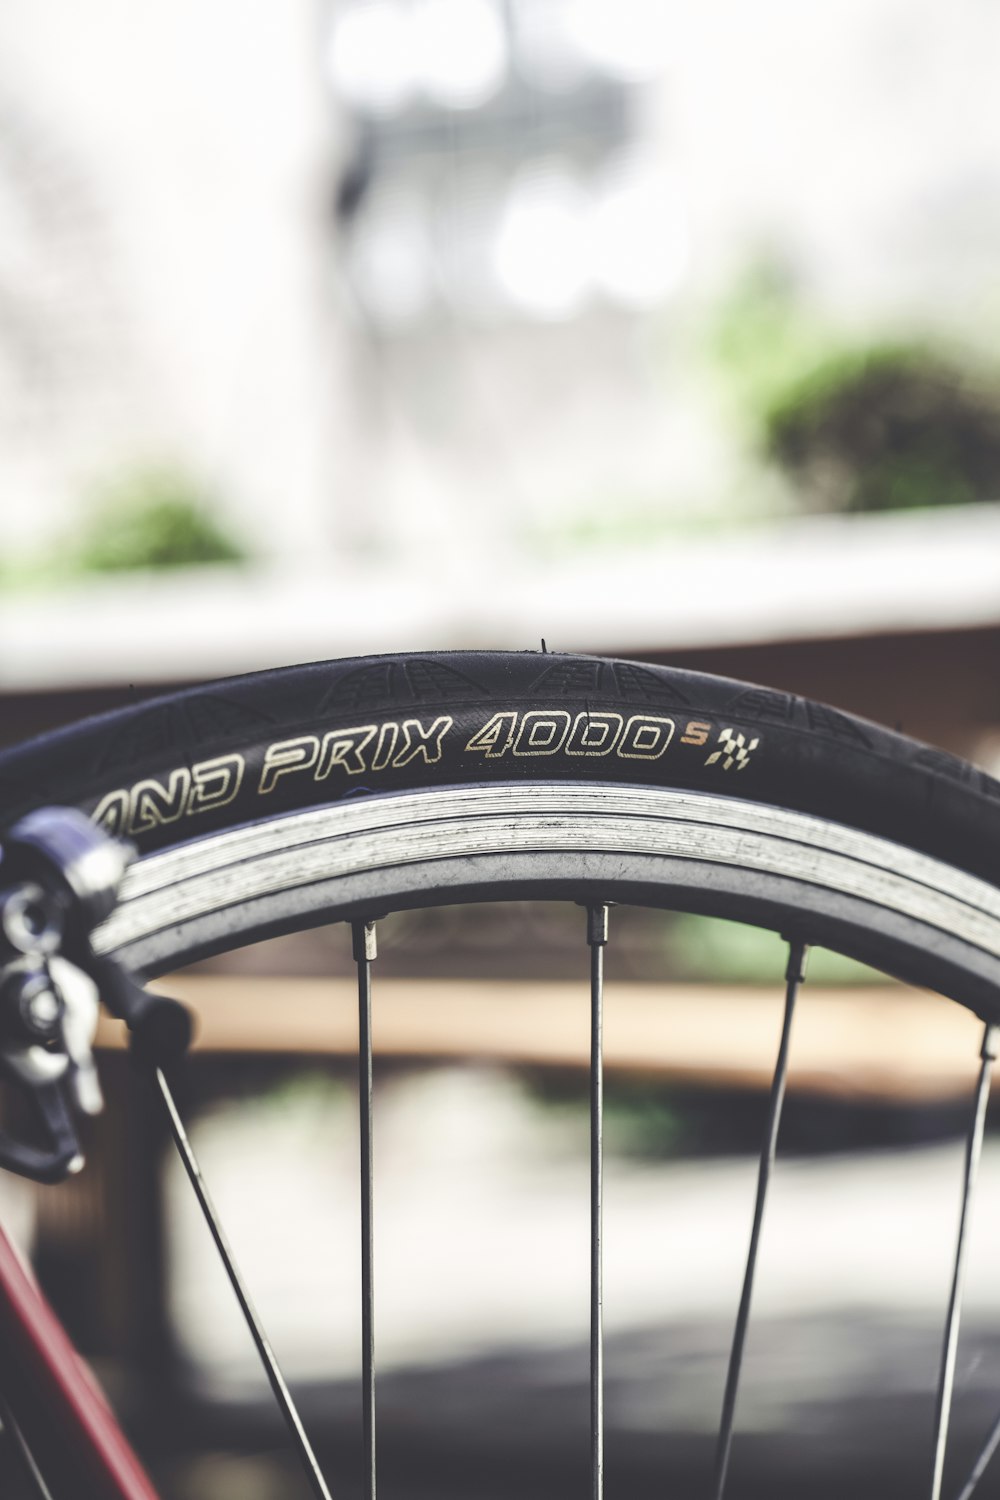 Foto de enfoque superficial de rueda de bicicleta